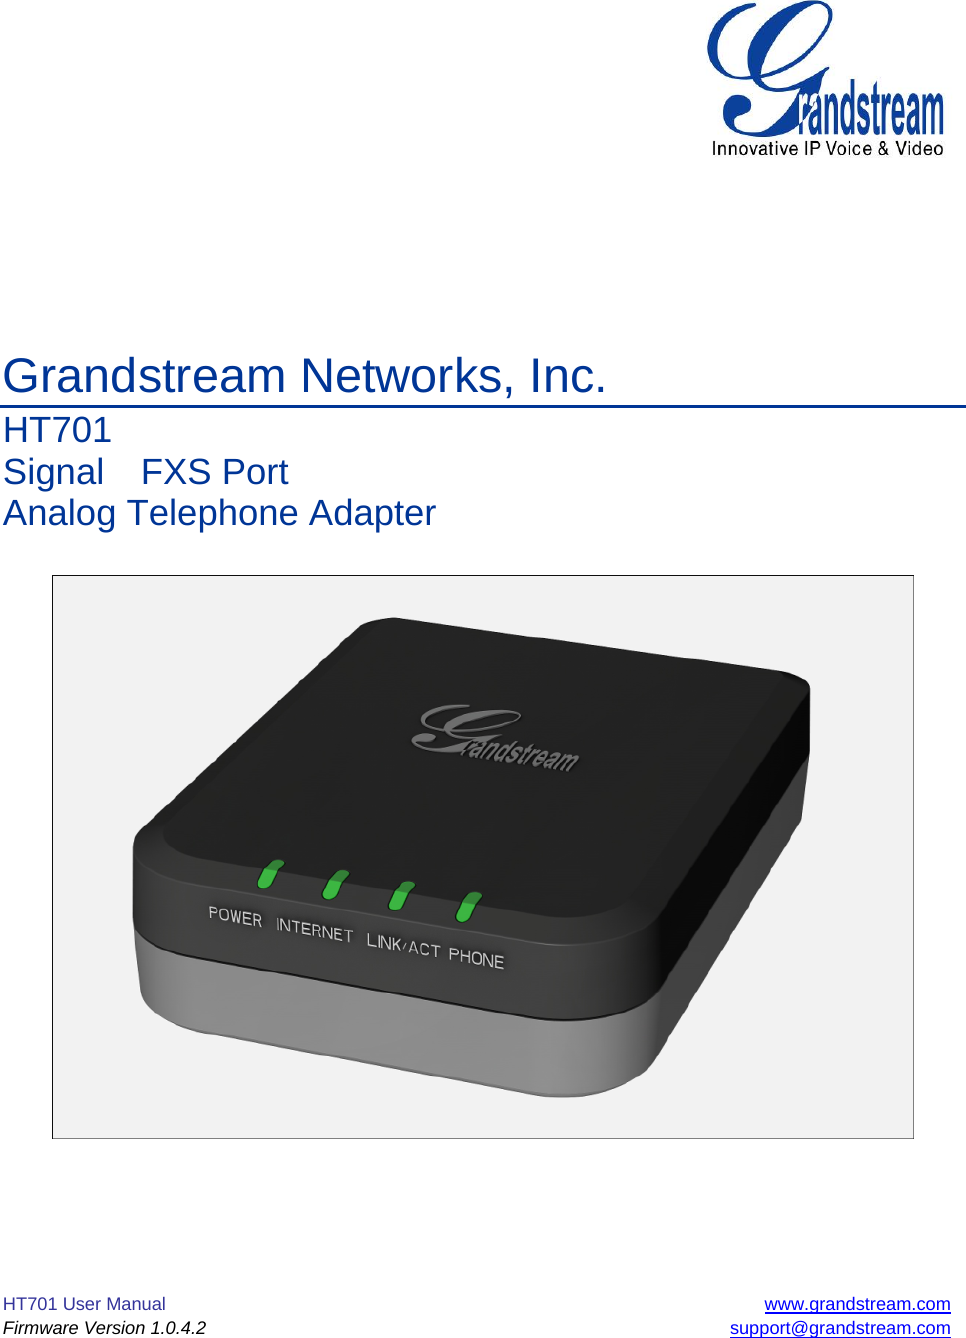  HT701 User Manual  www.grandstream.com Firmware Version 1.0.4.2 support@grandstream.com          Grandstream Networks, Inc. HT701 Signal  FXS Port  Analog Telephone Adapter              